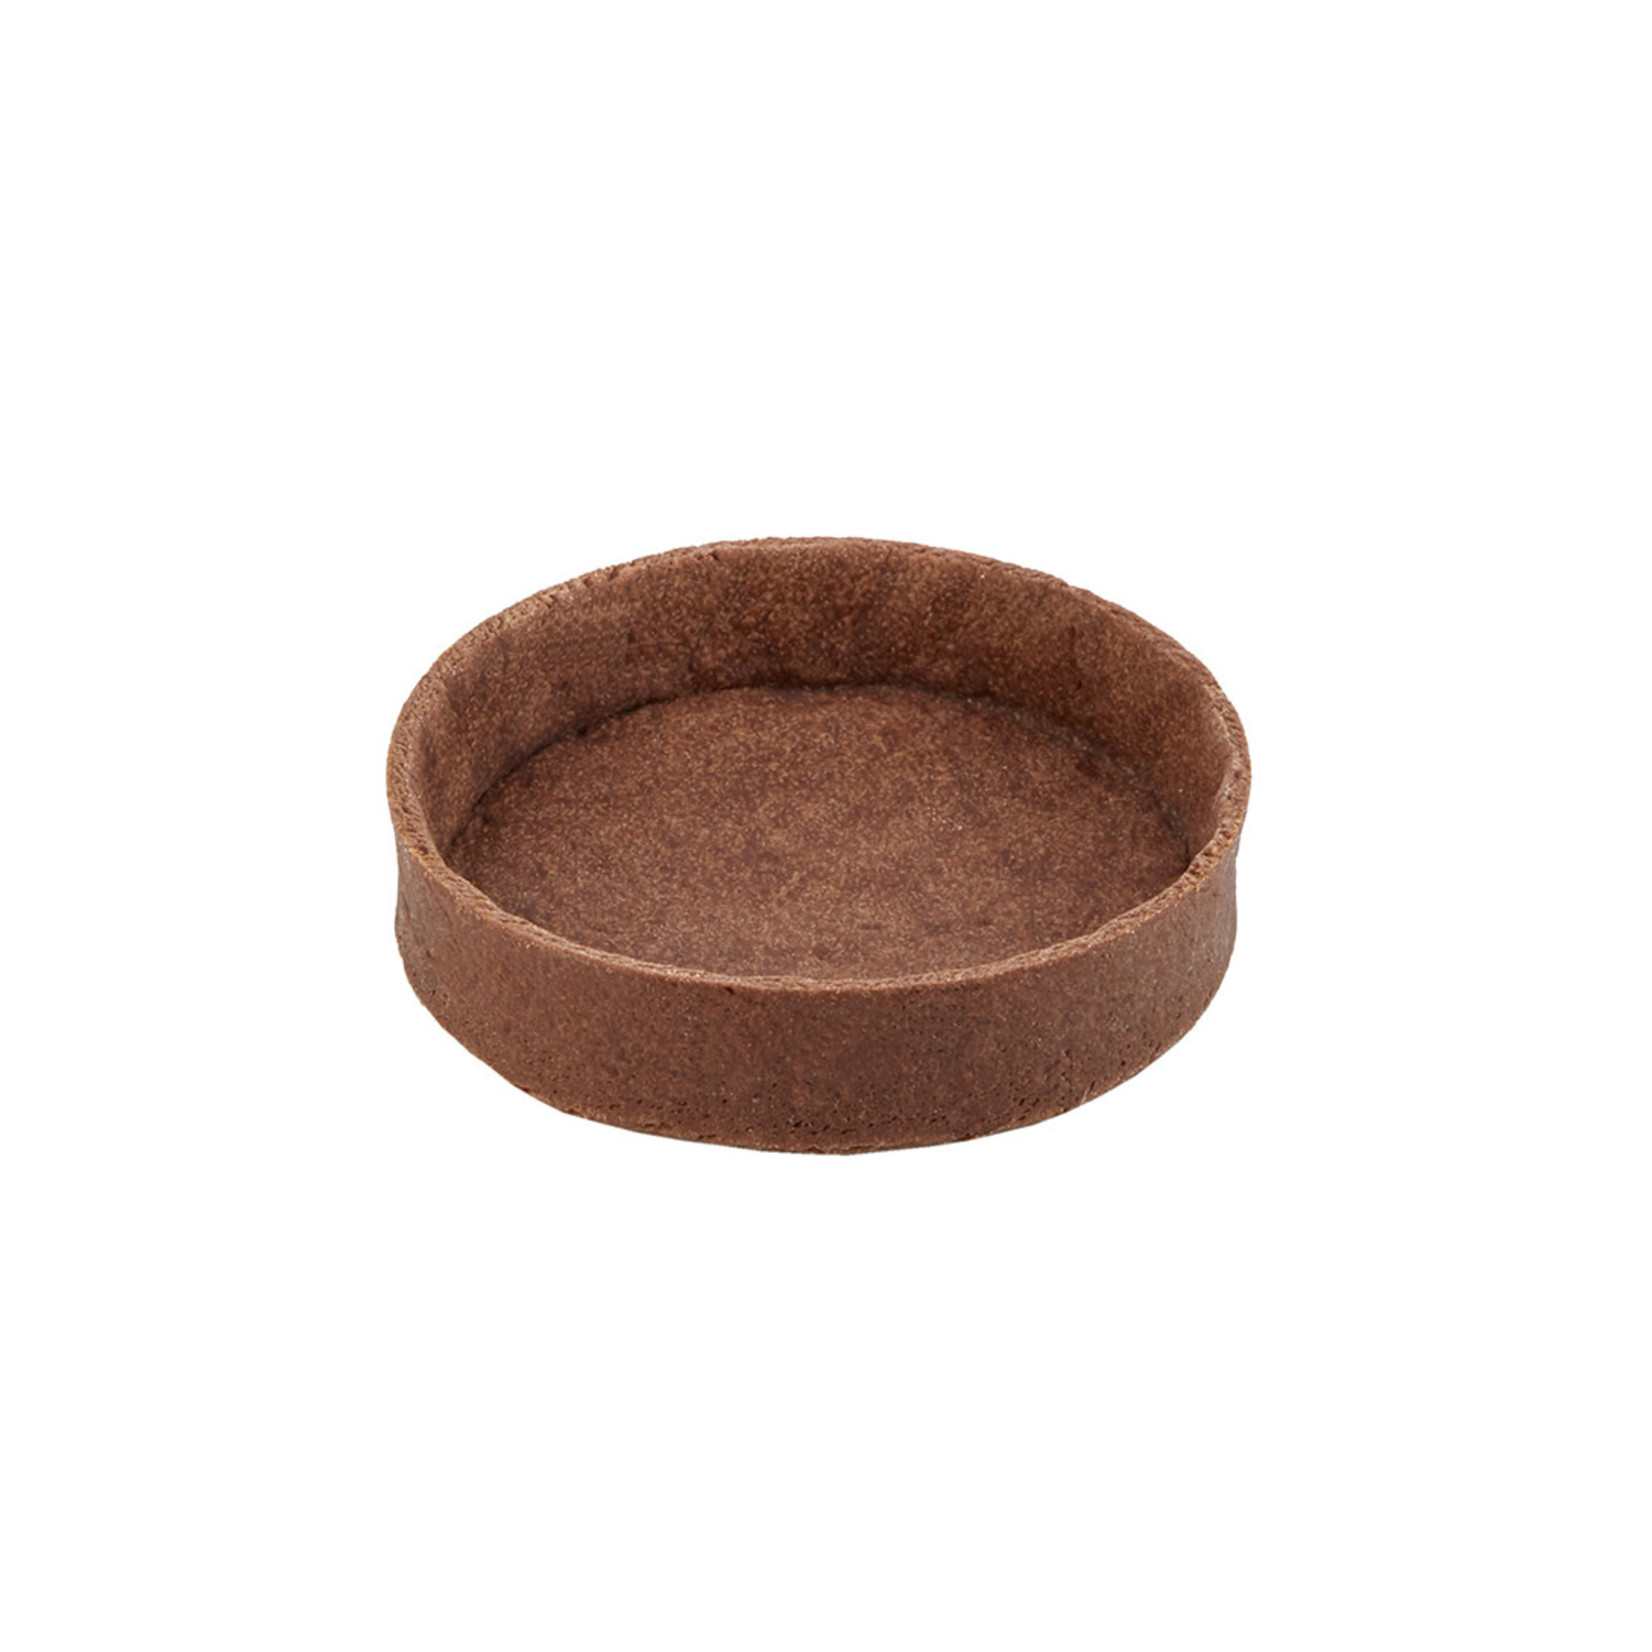 Moda Moda - Tart shell, Chocolate round - 3.2'' (72ct), PA7213